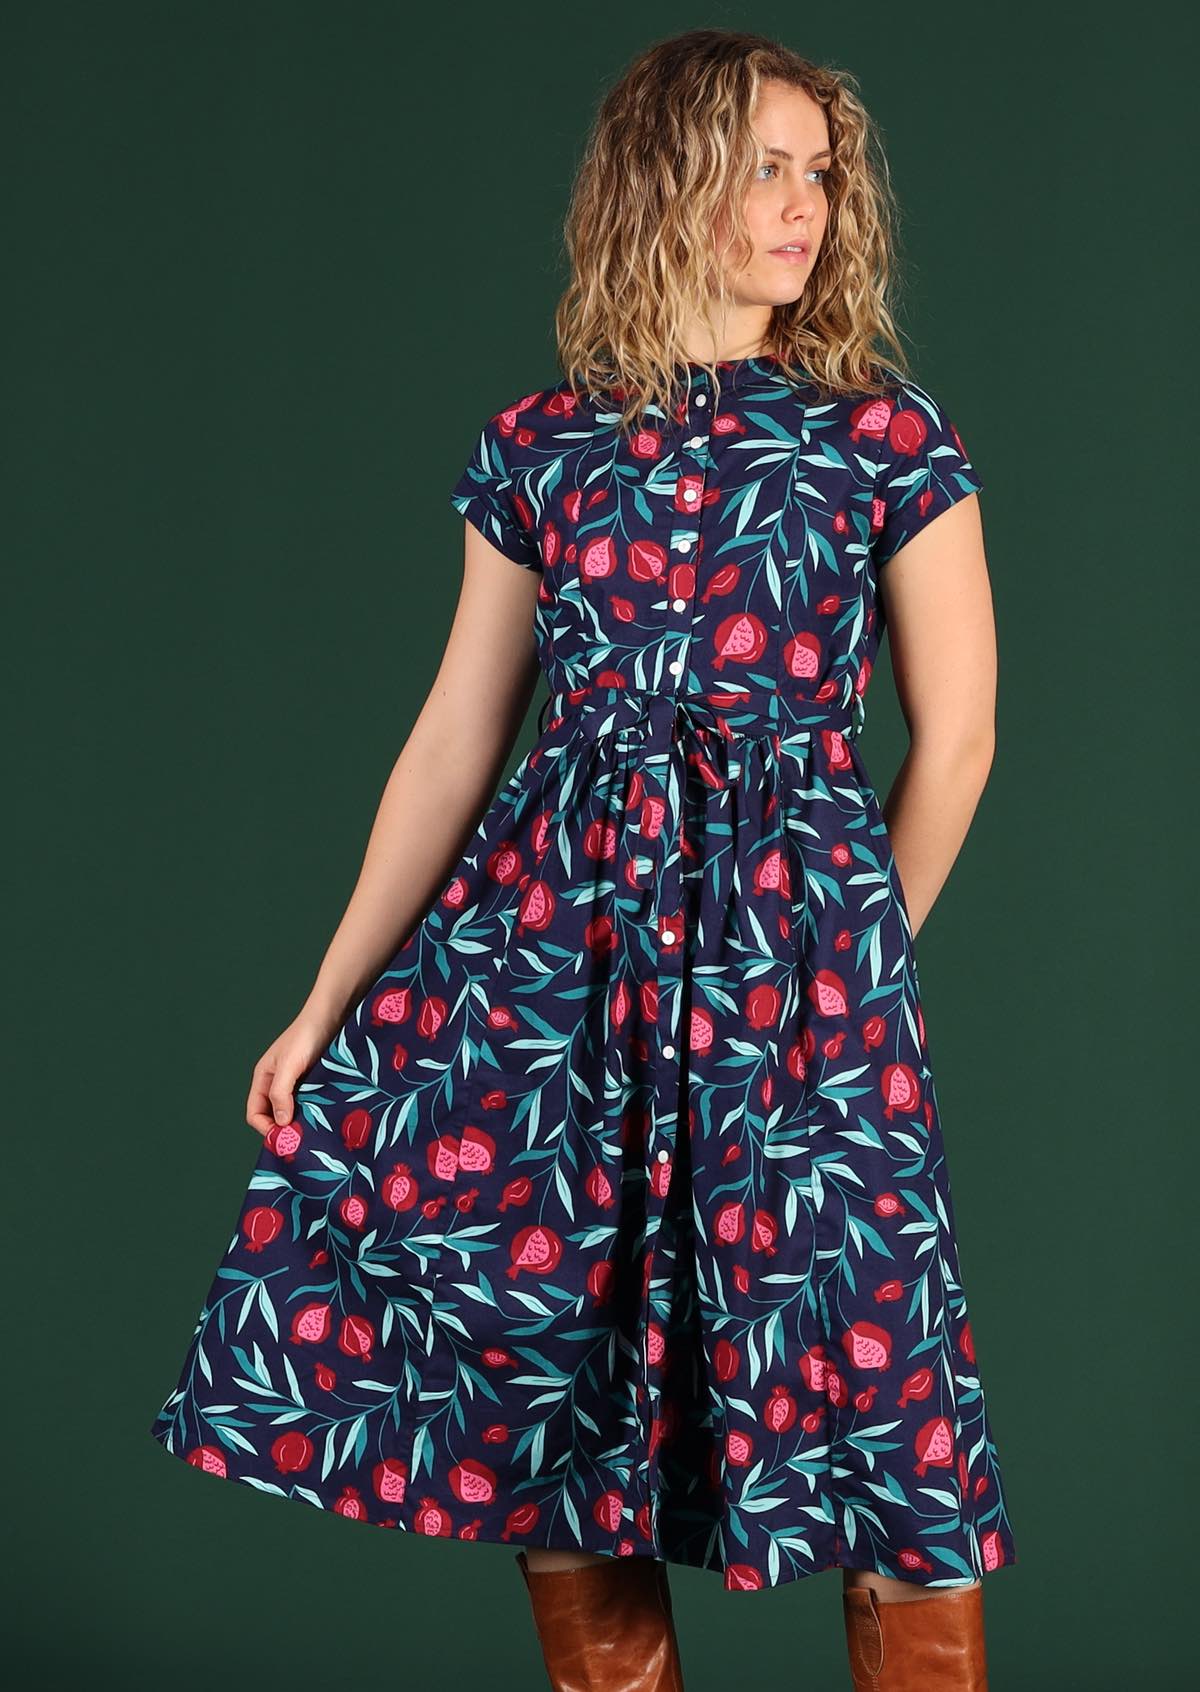 Model wears a blue pomegranate print dress with waist tie